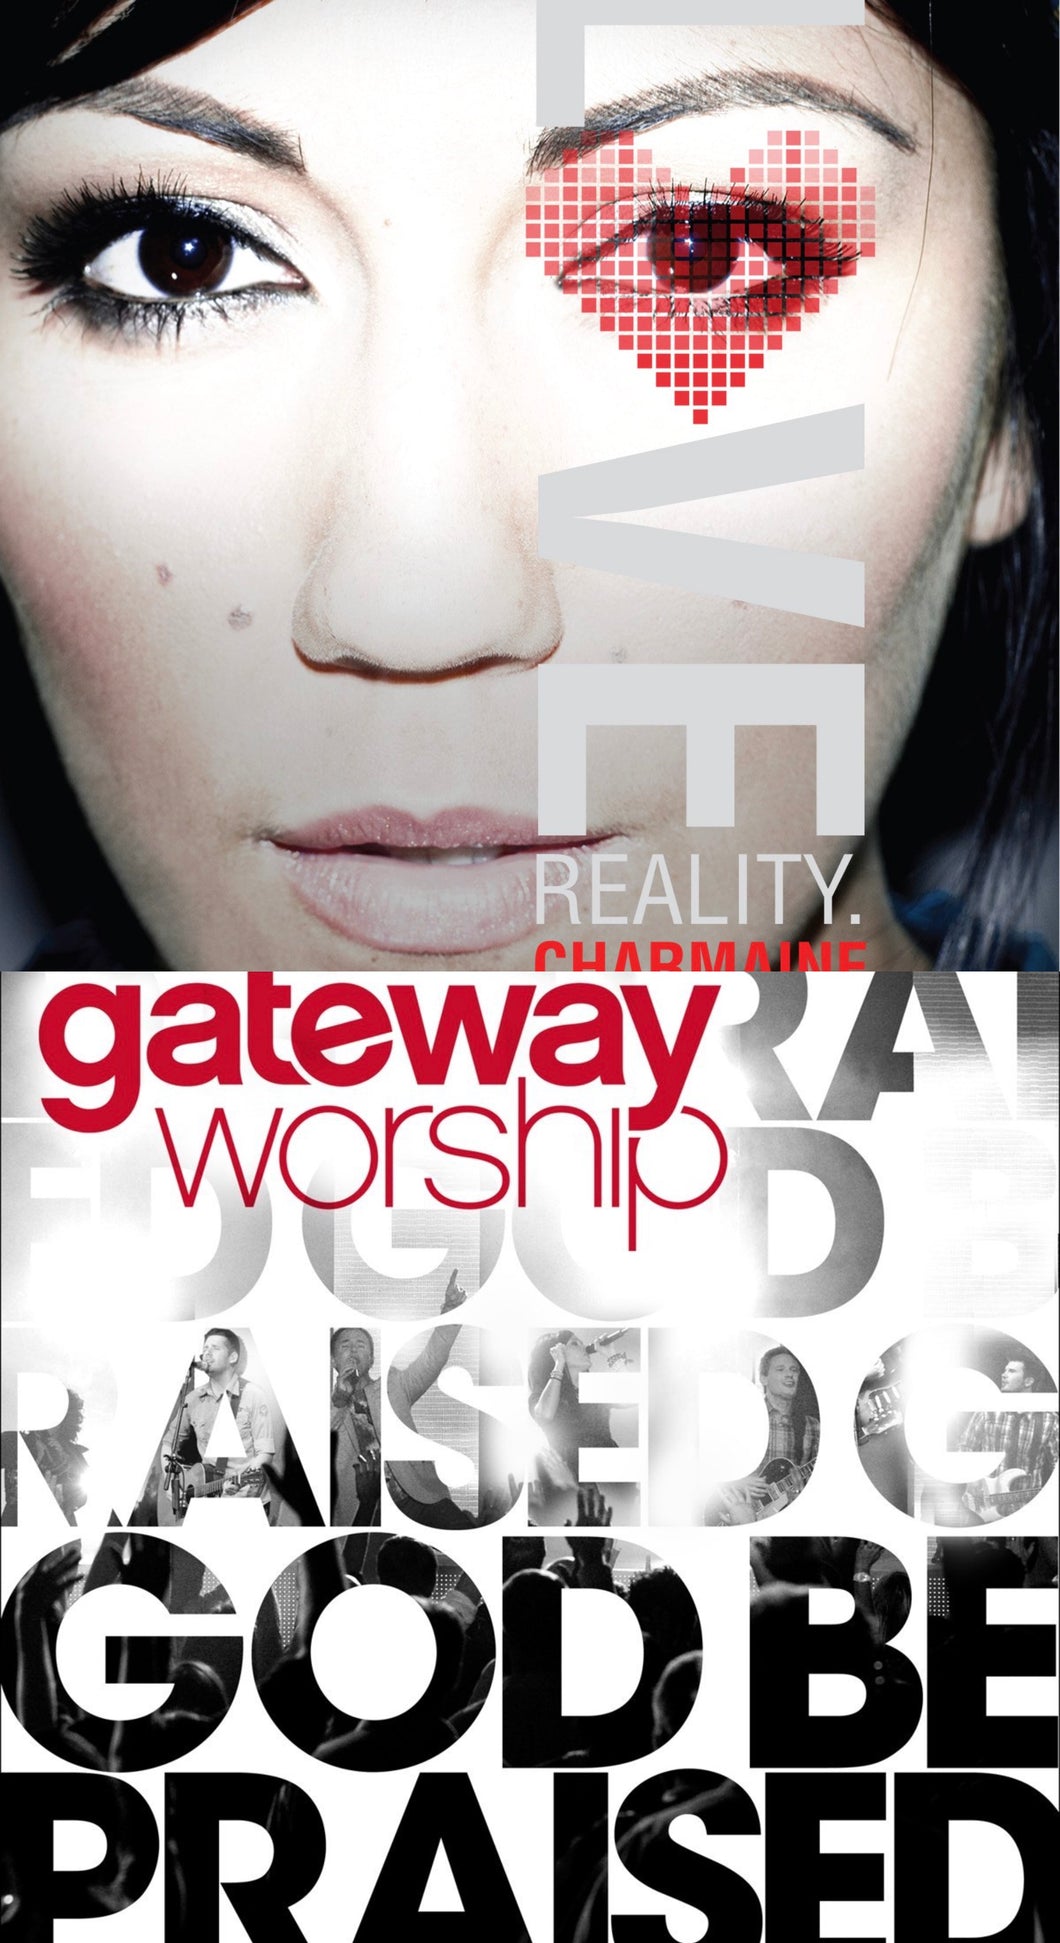 Charmaine Love Reality + Gateway Worship God Be Praised 2CD